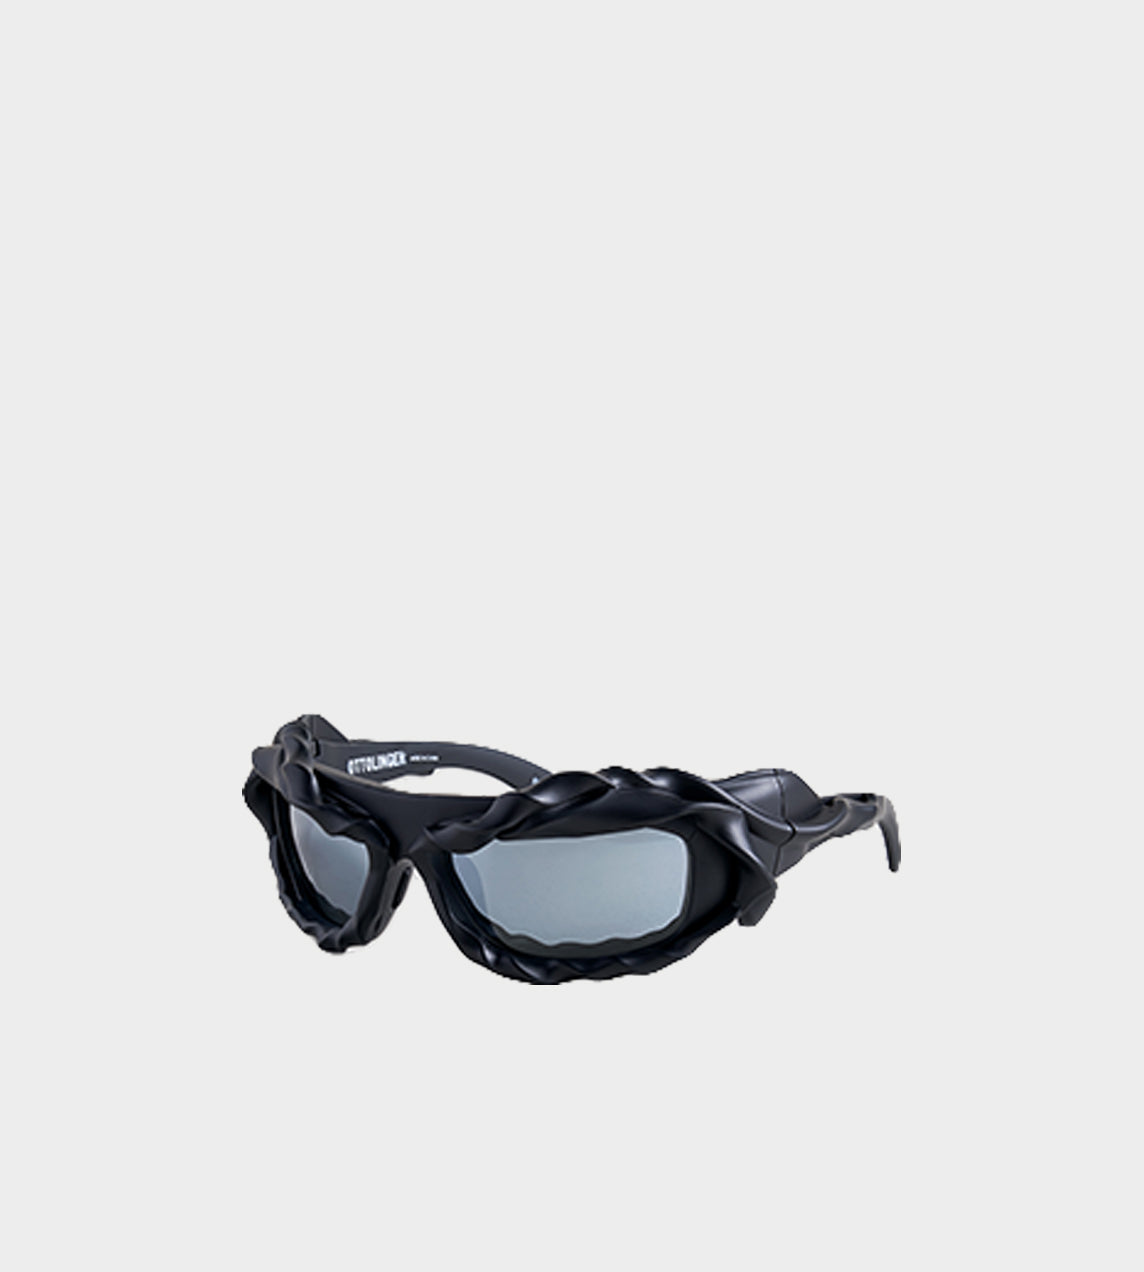 Ottolinger - Twisted Sunglasses Black